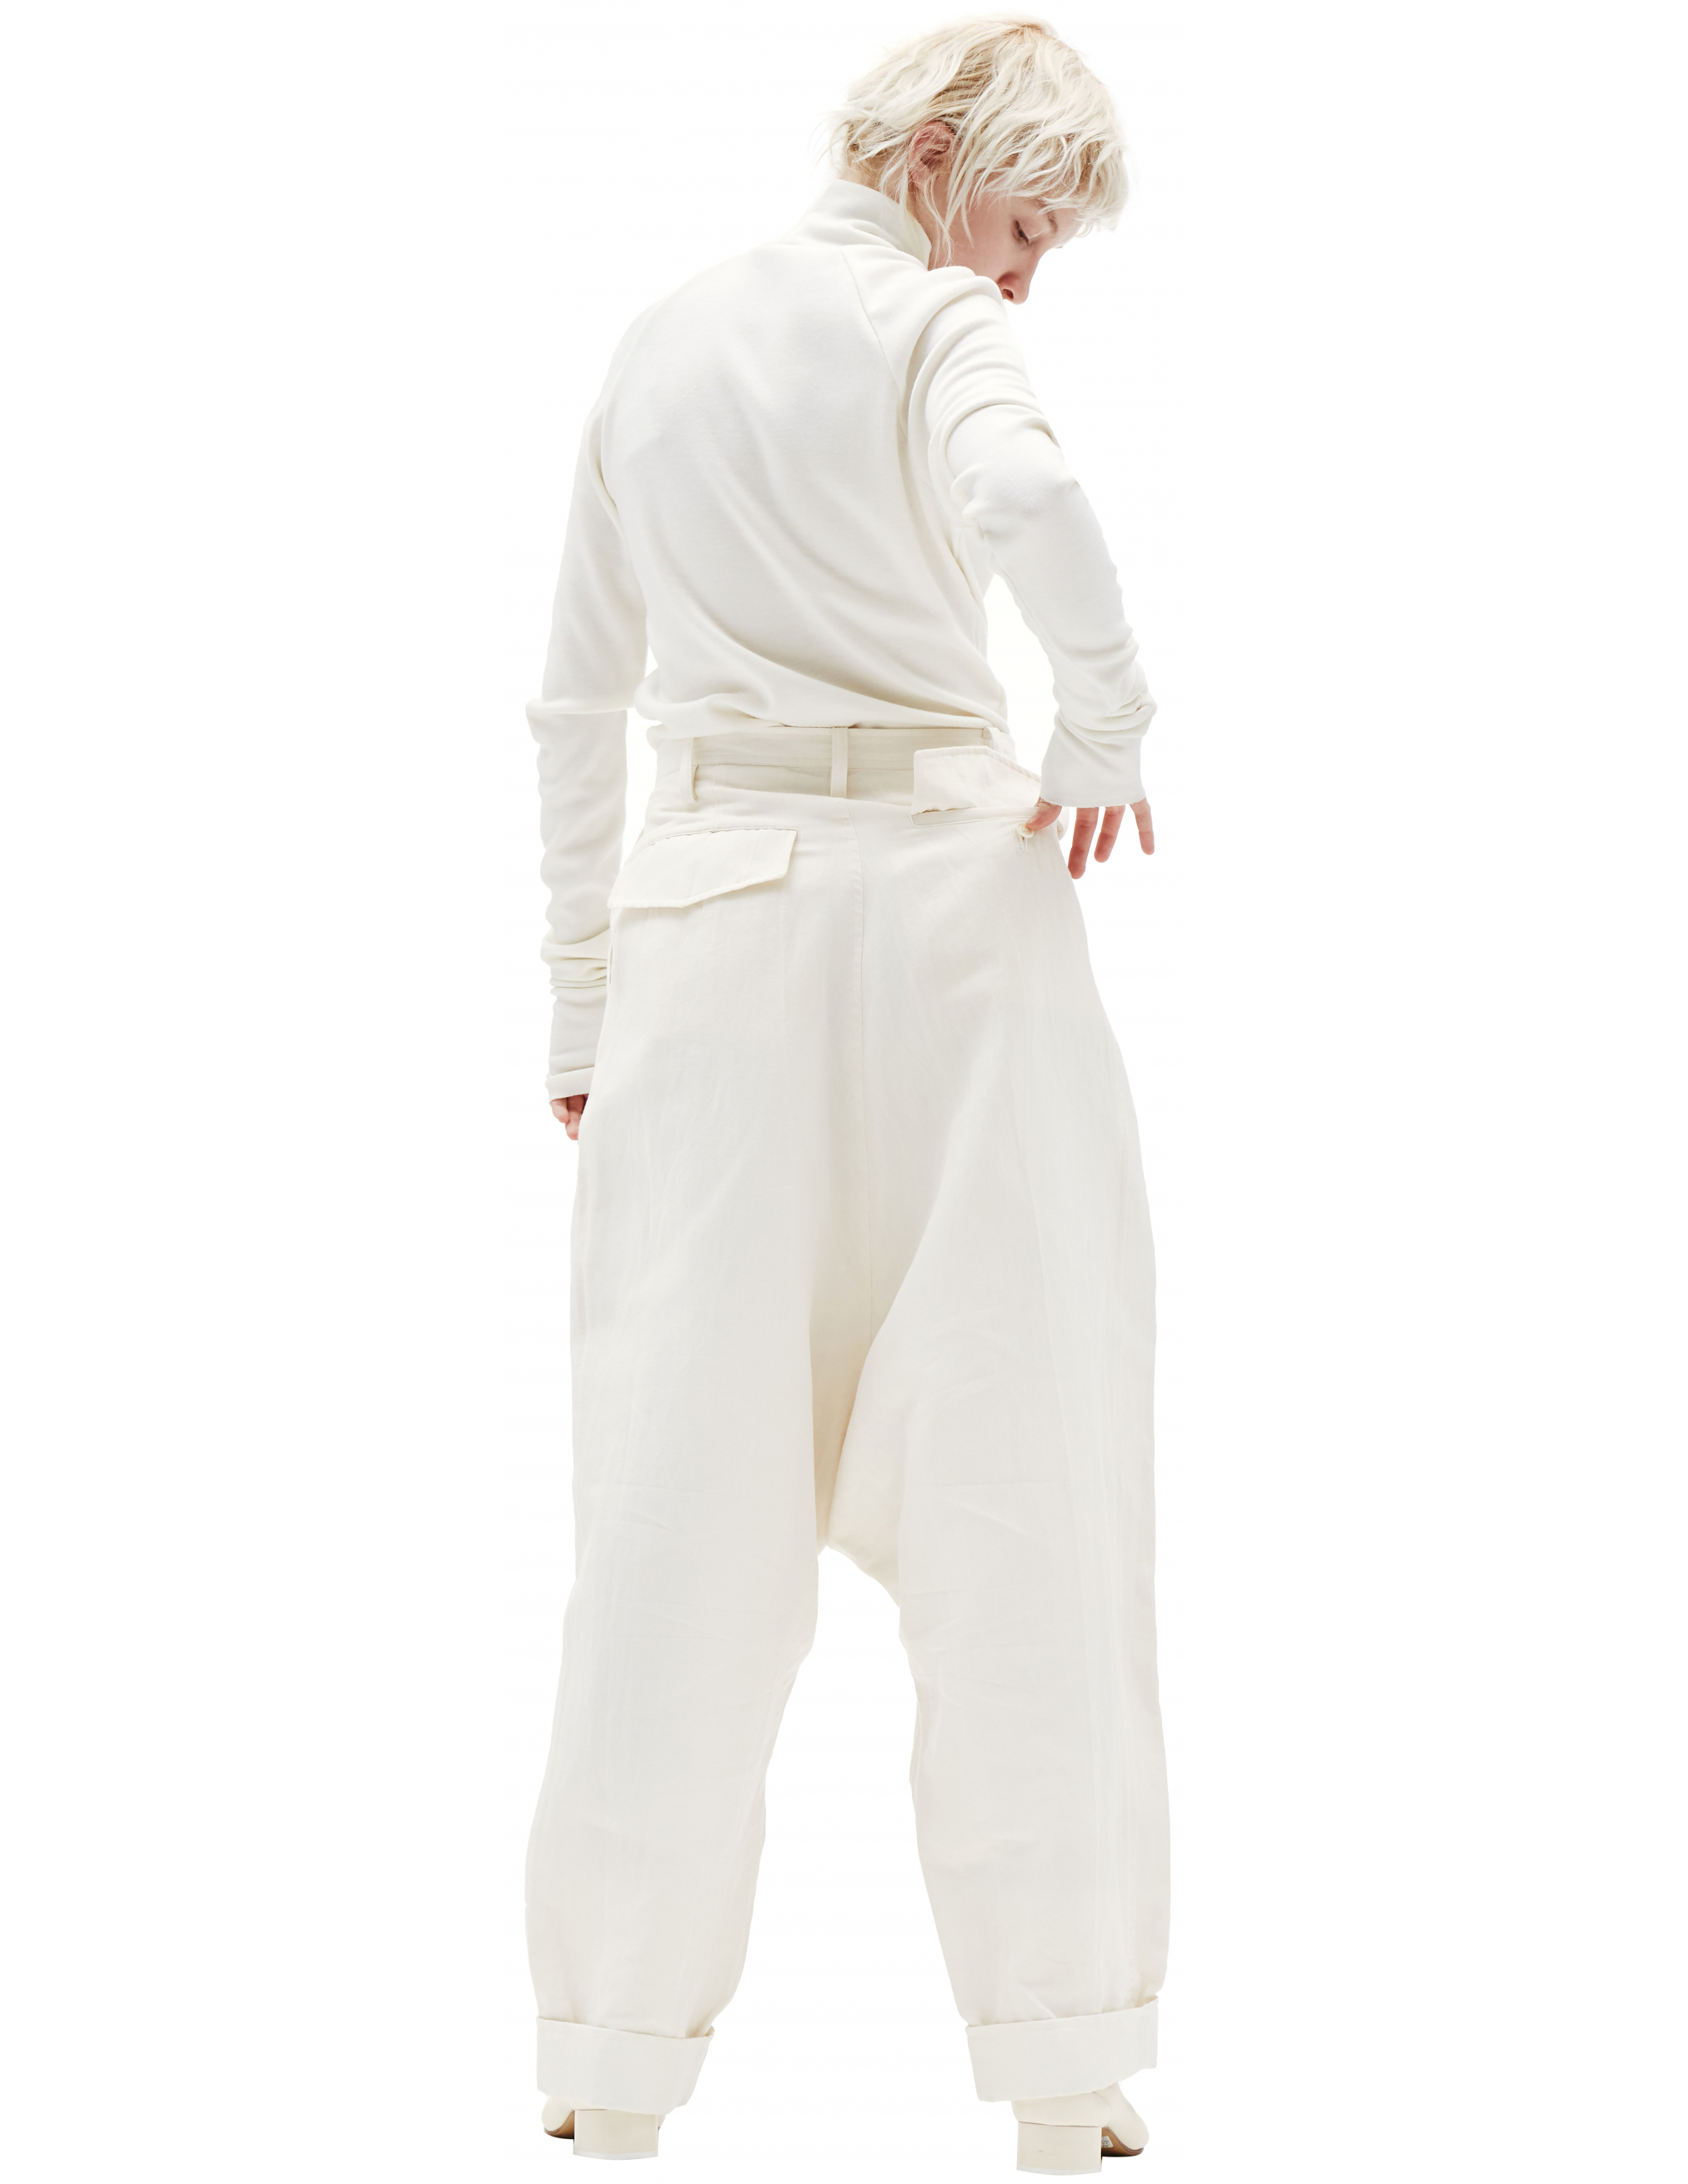 Широкие брюки из льна и хлопка - Ys YW-P15-009/ivory Фото 2